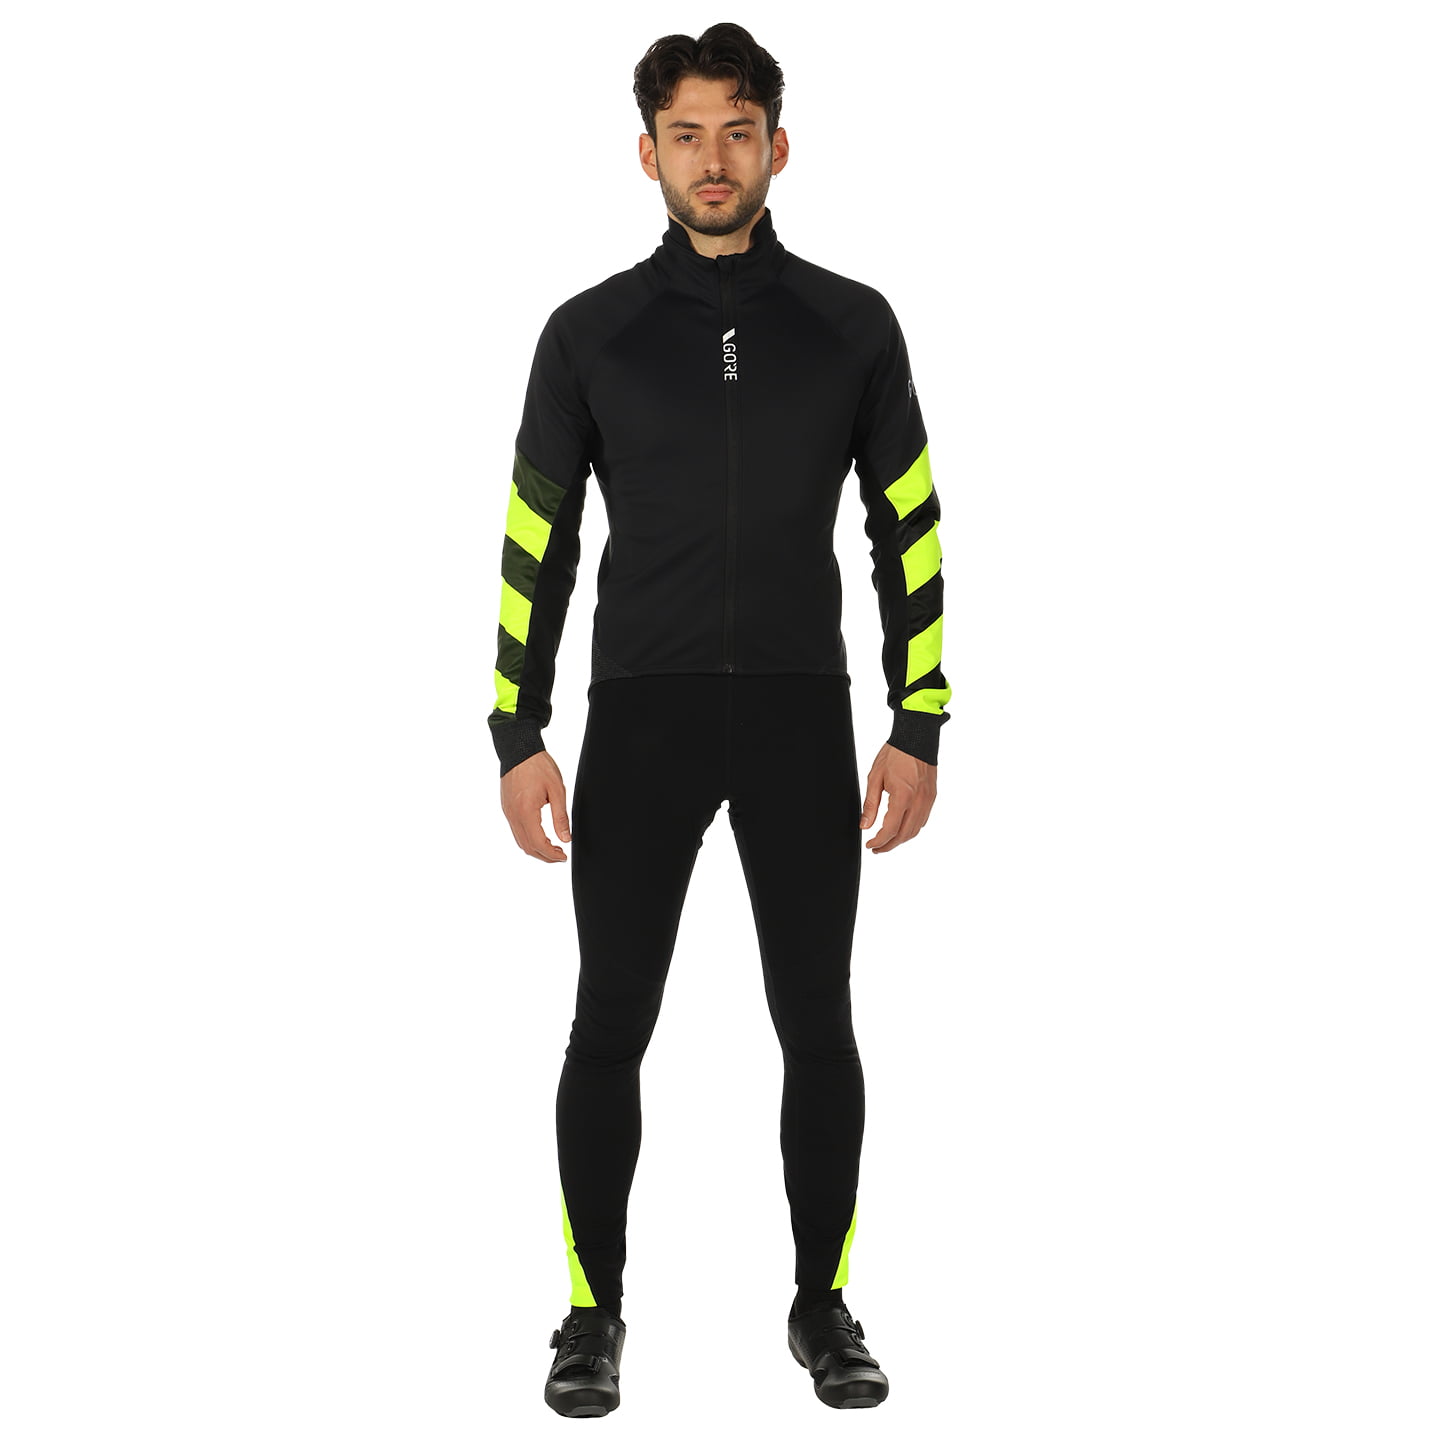 GORE WEAR C5 GTX Infinium Signal Set (winter jacket + cycling tights) Set (2 pieces), for men